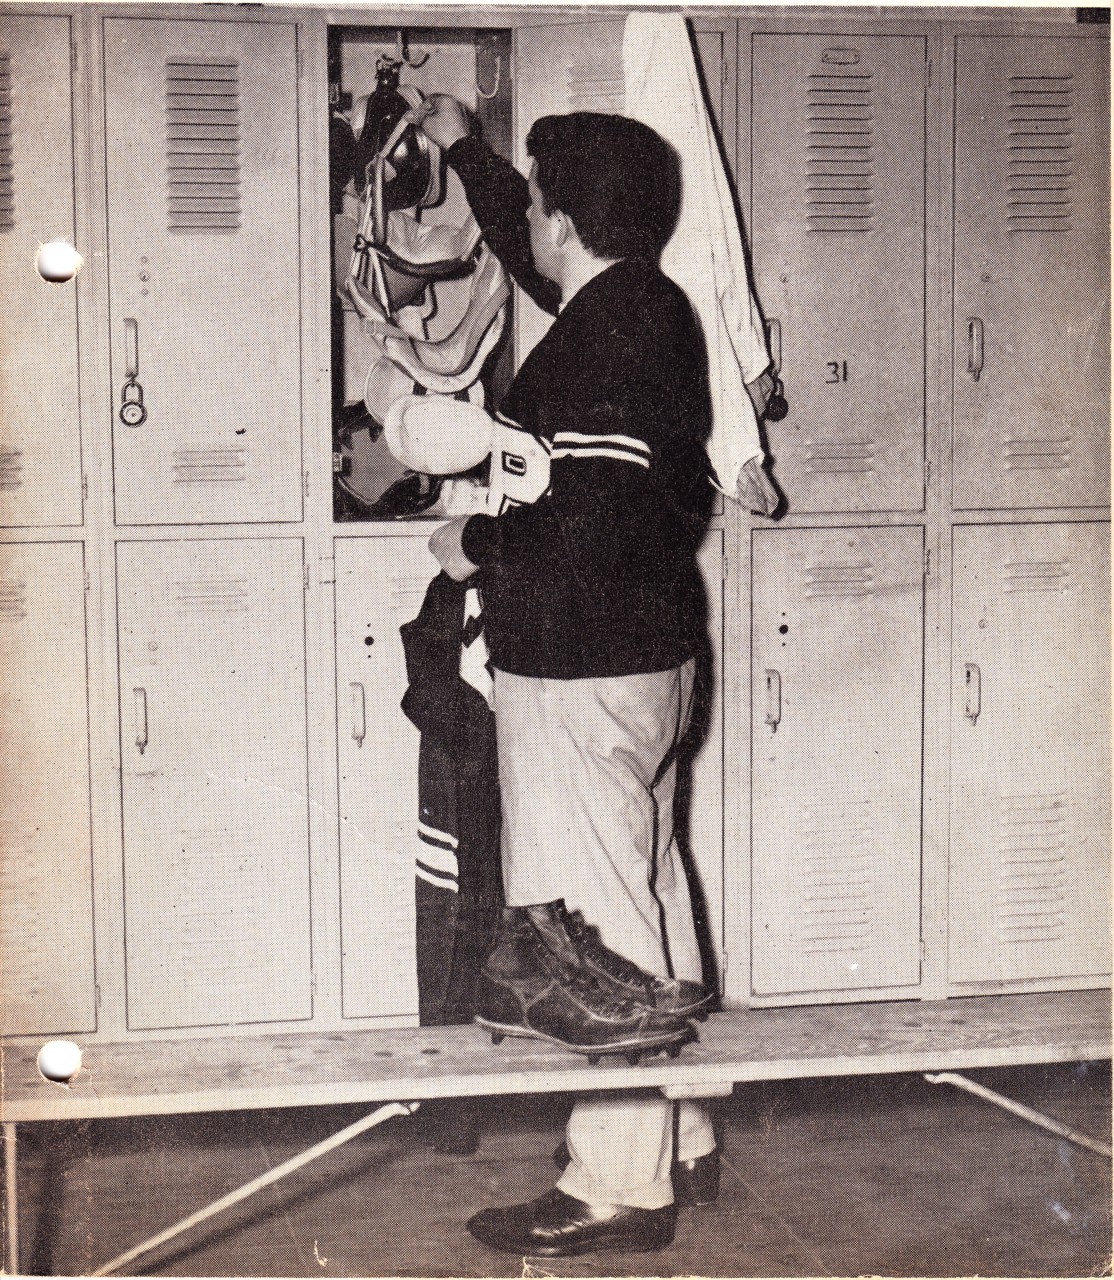 John O'Donnell, Alumni Bulletin, Winter 1950 (University Archives photo)